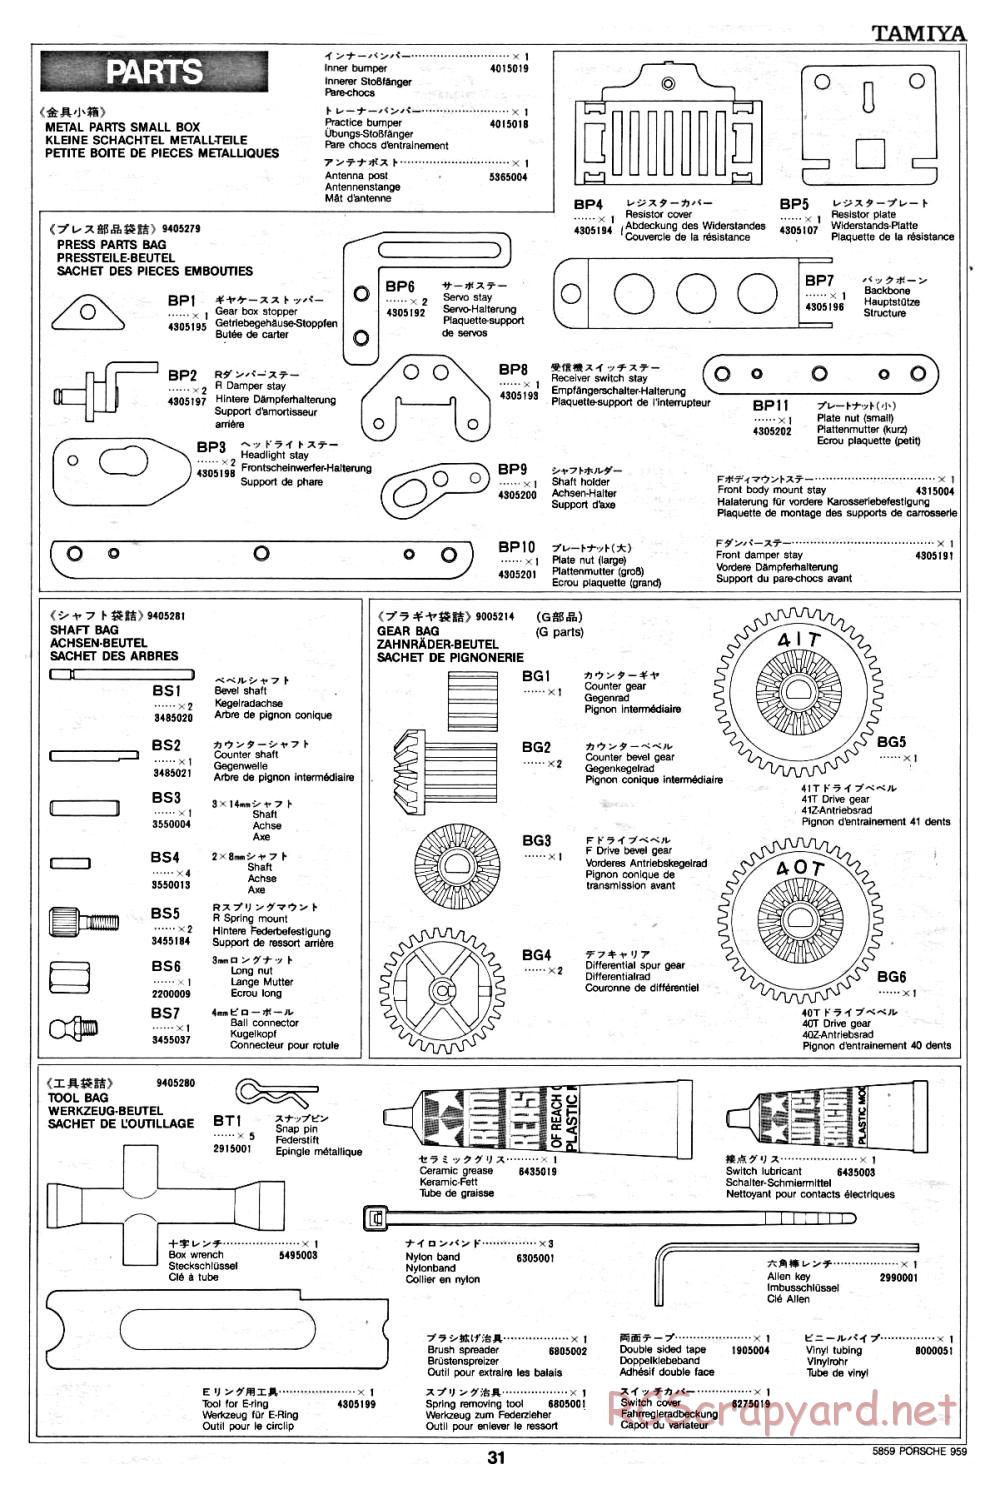 Tamiya - Porsche 959 - 58059 - Manual - Page 31